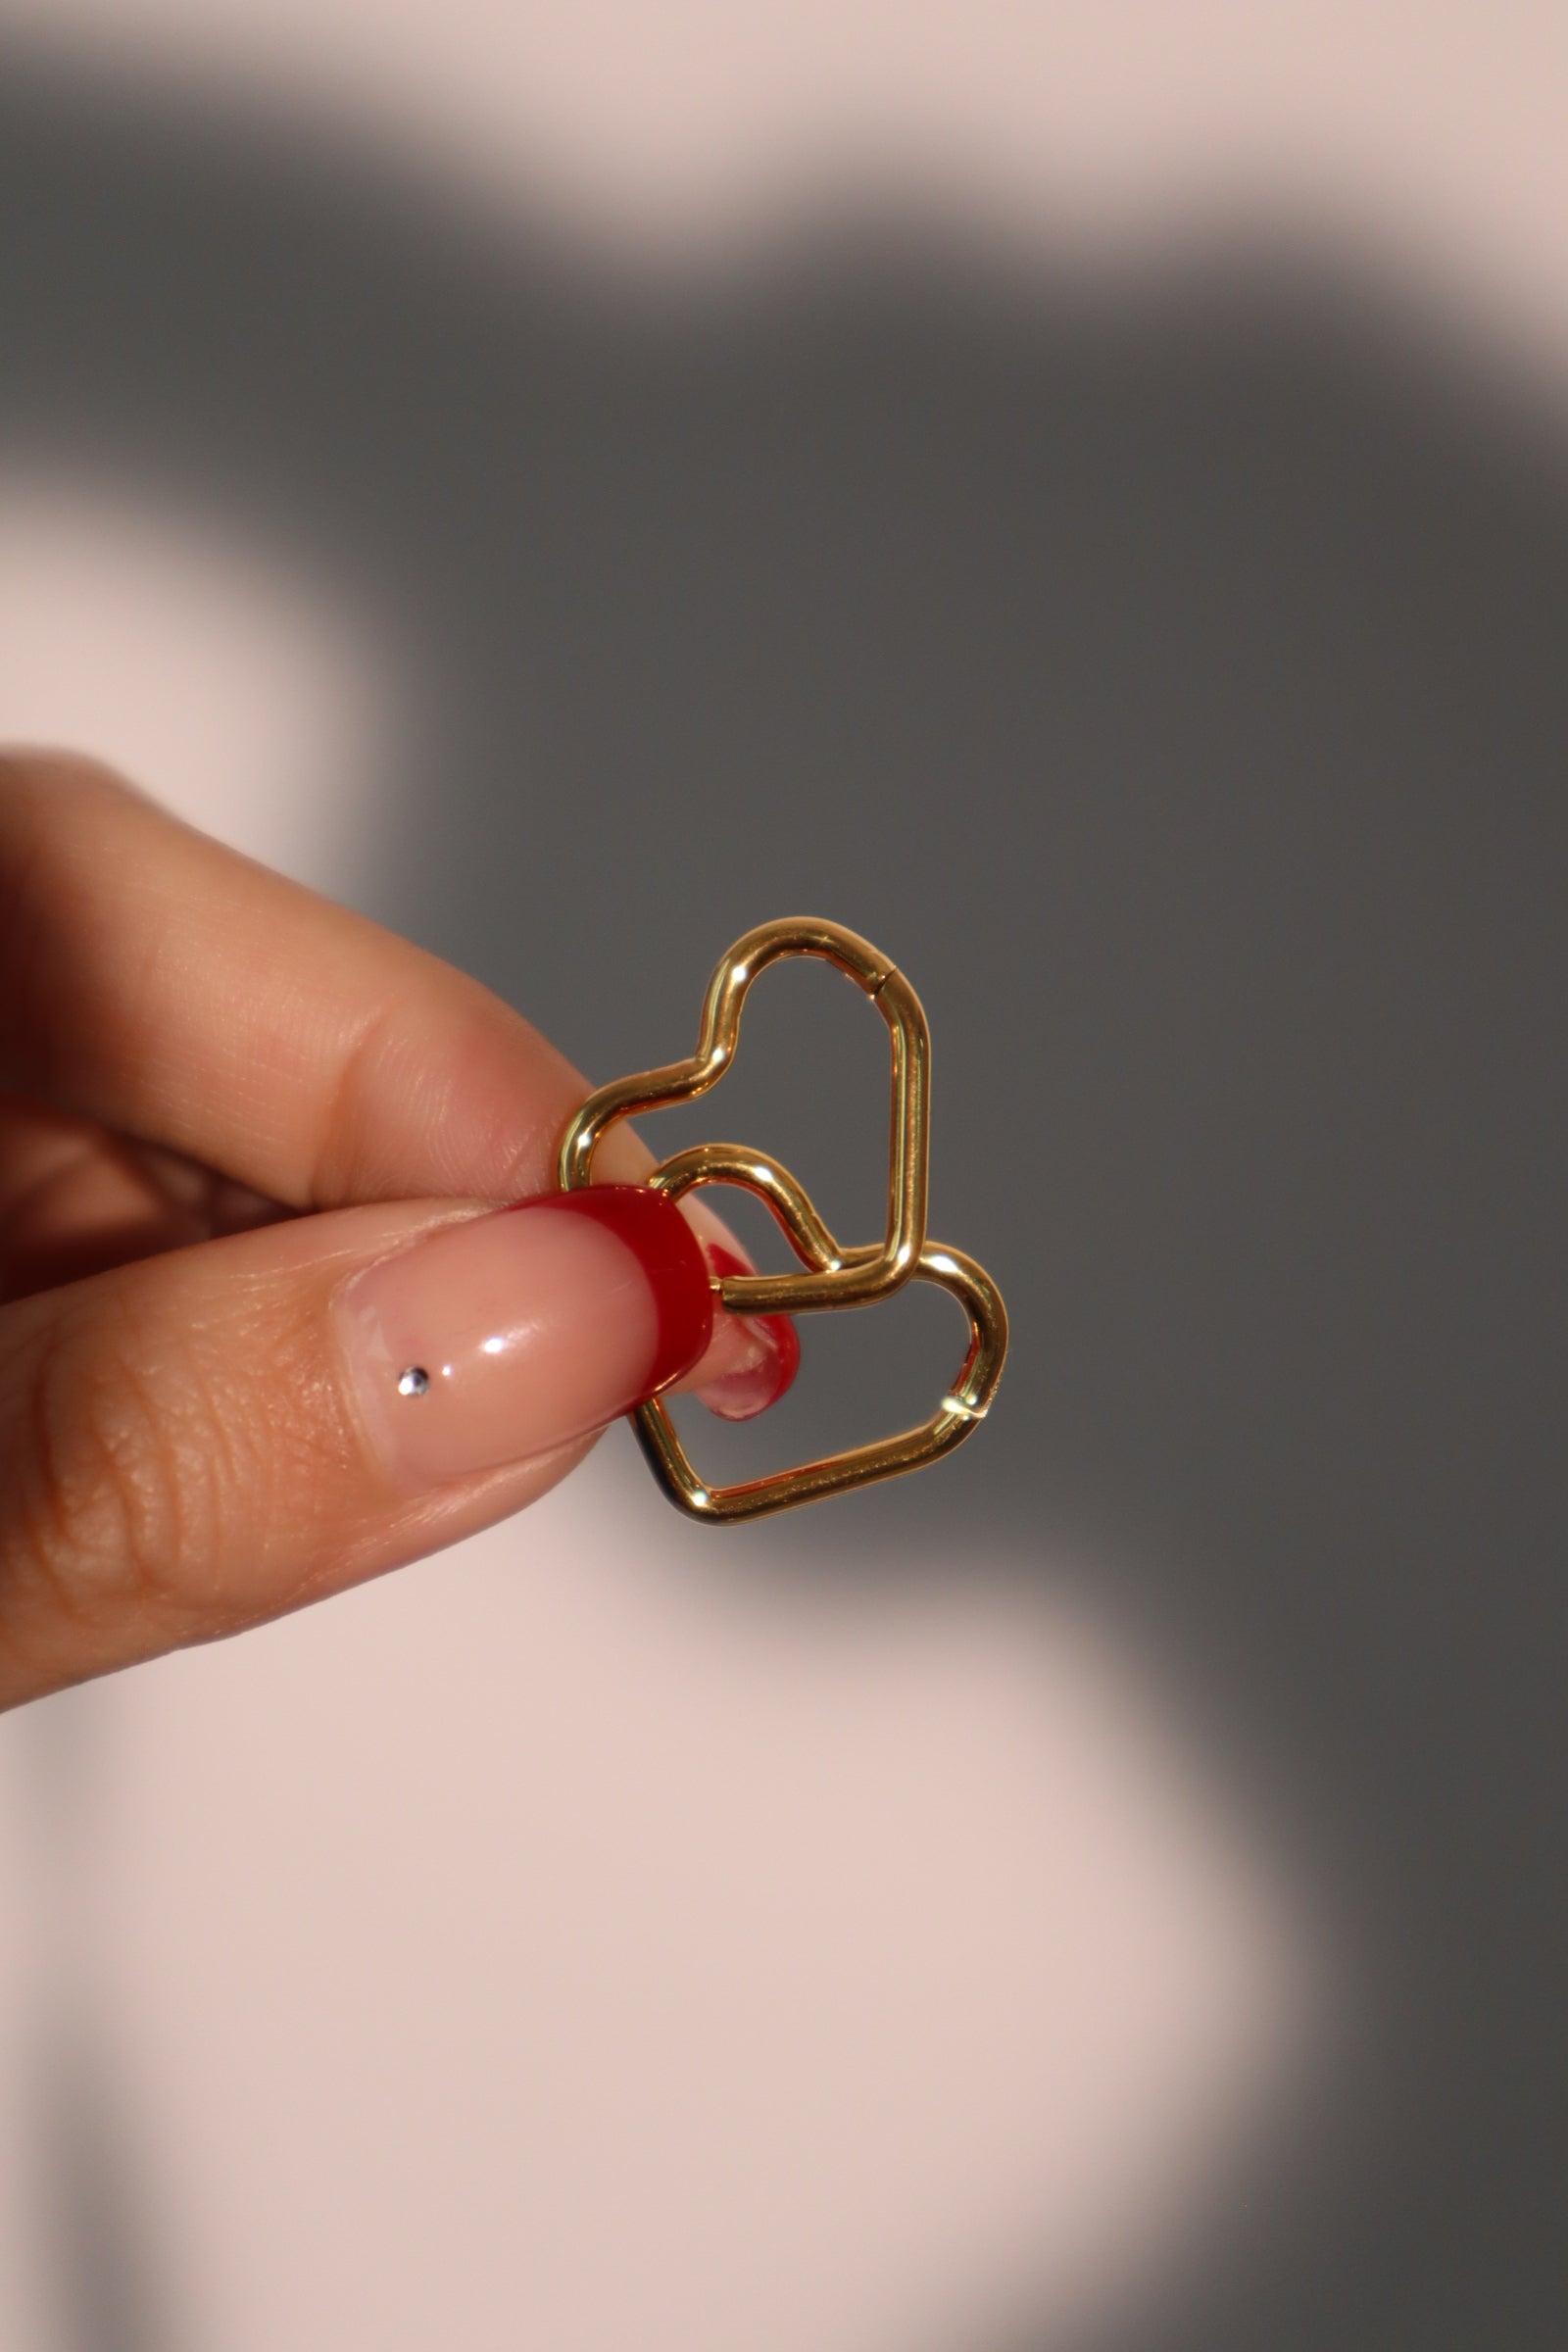 18K Real Gold Stainless Steel Heart Hoops Earrings